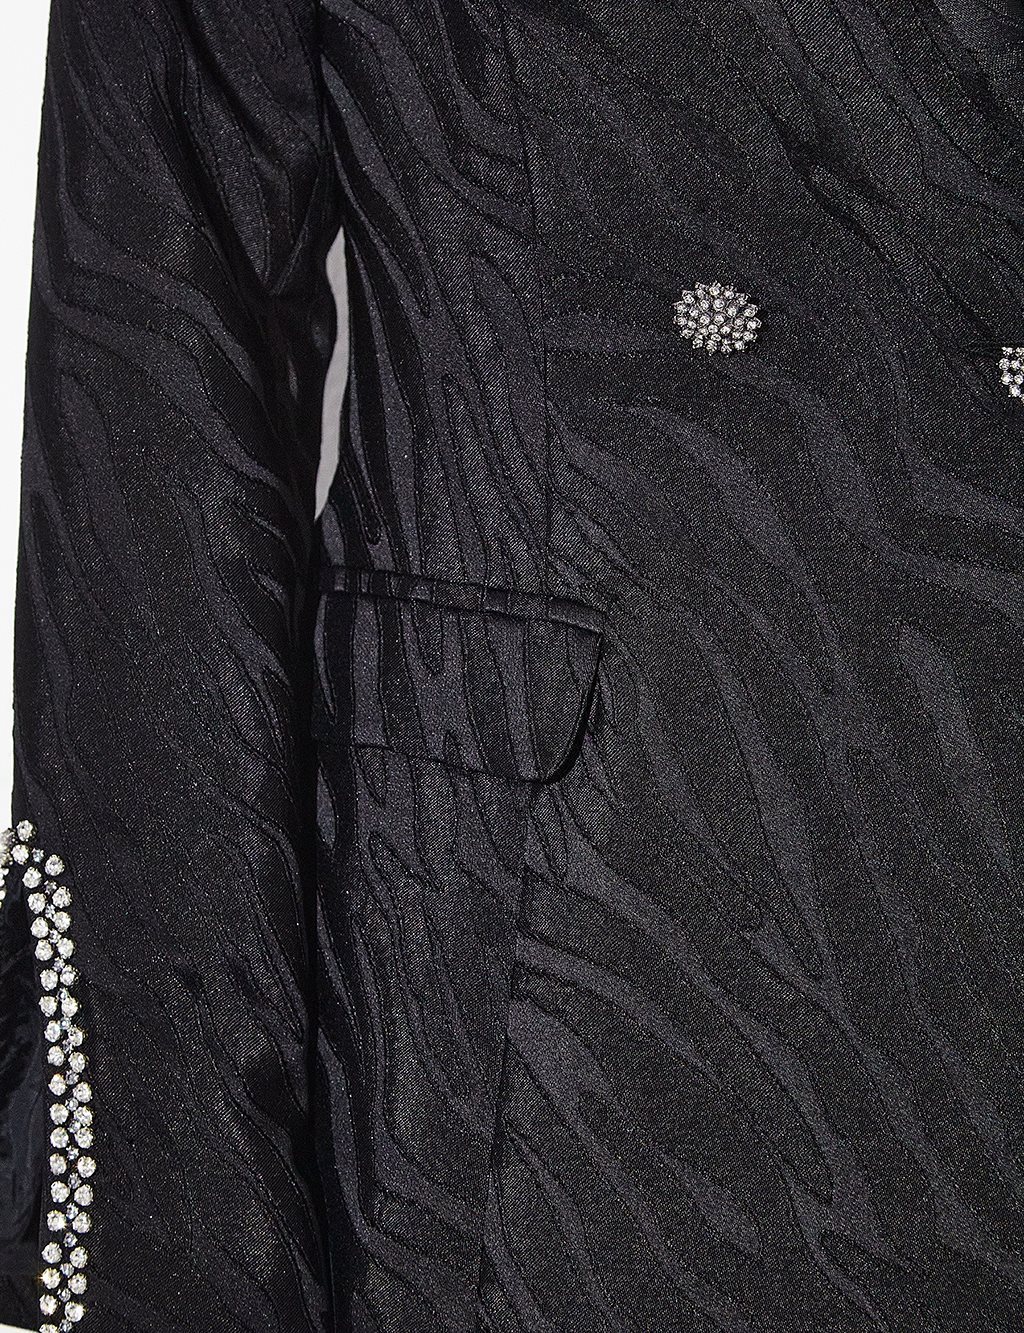 Patterned Shiny Stone Detailed Double Suit Black